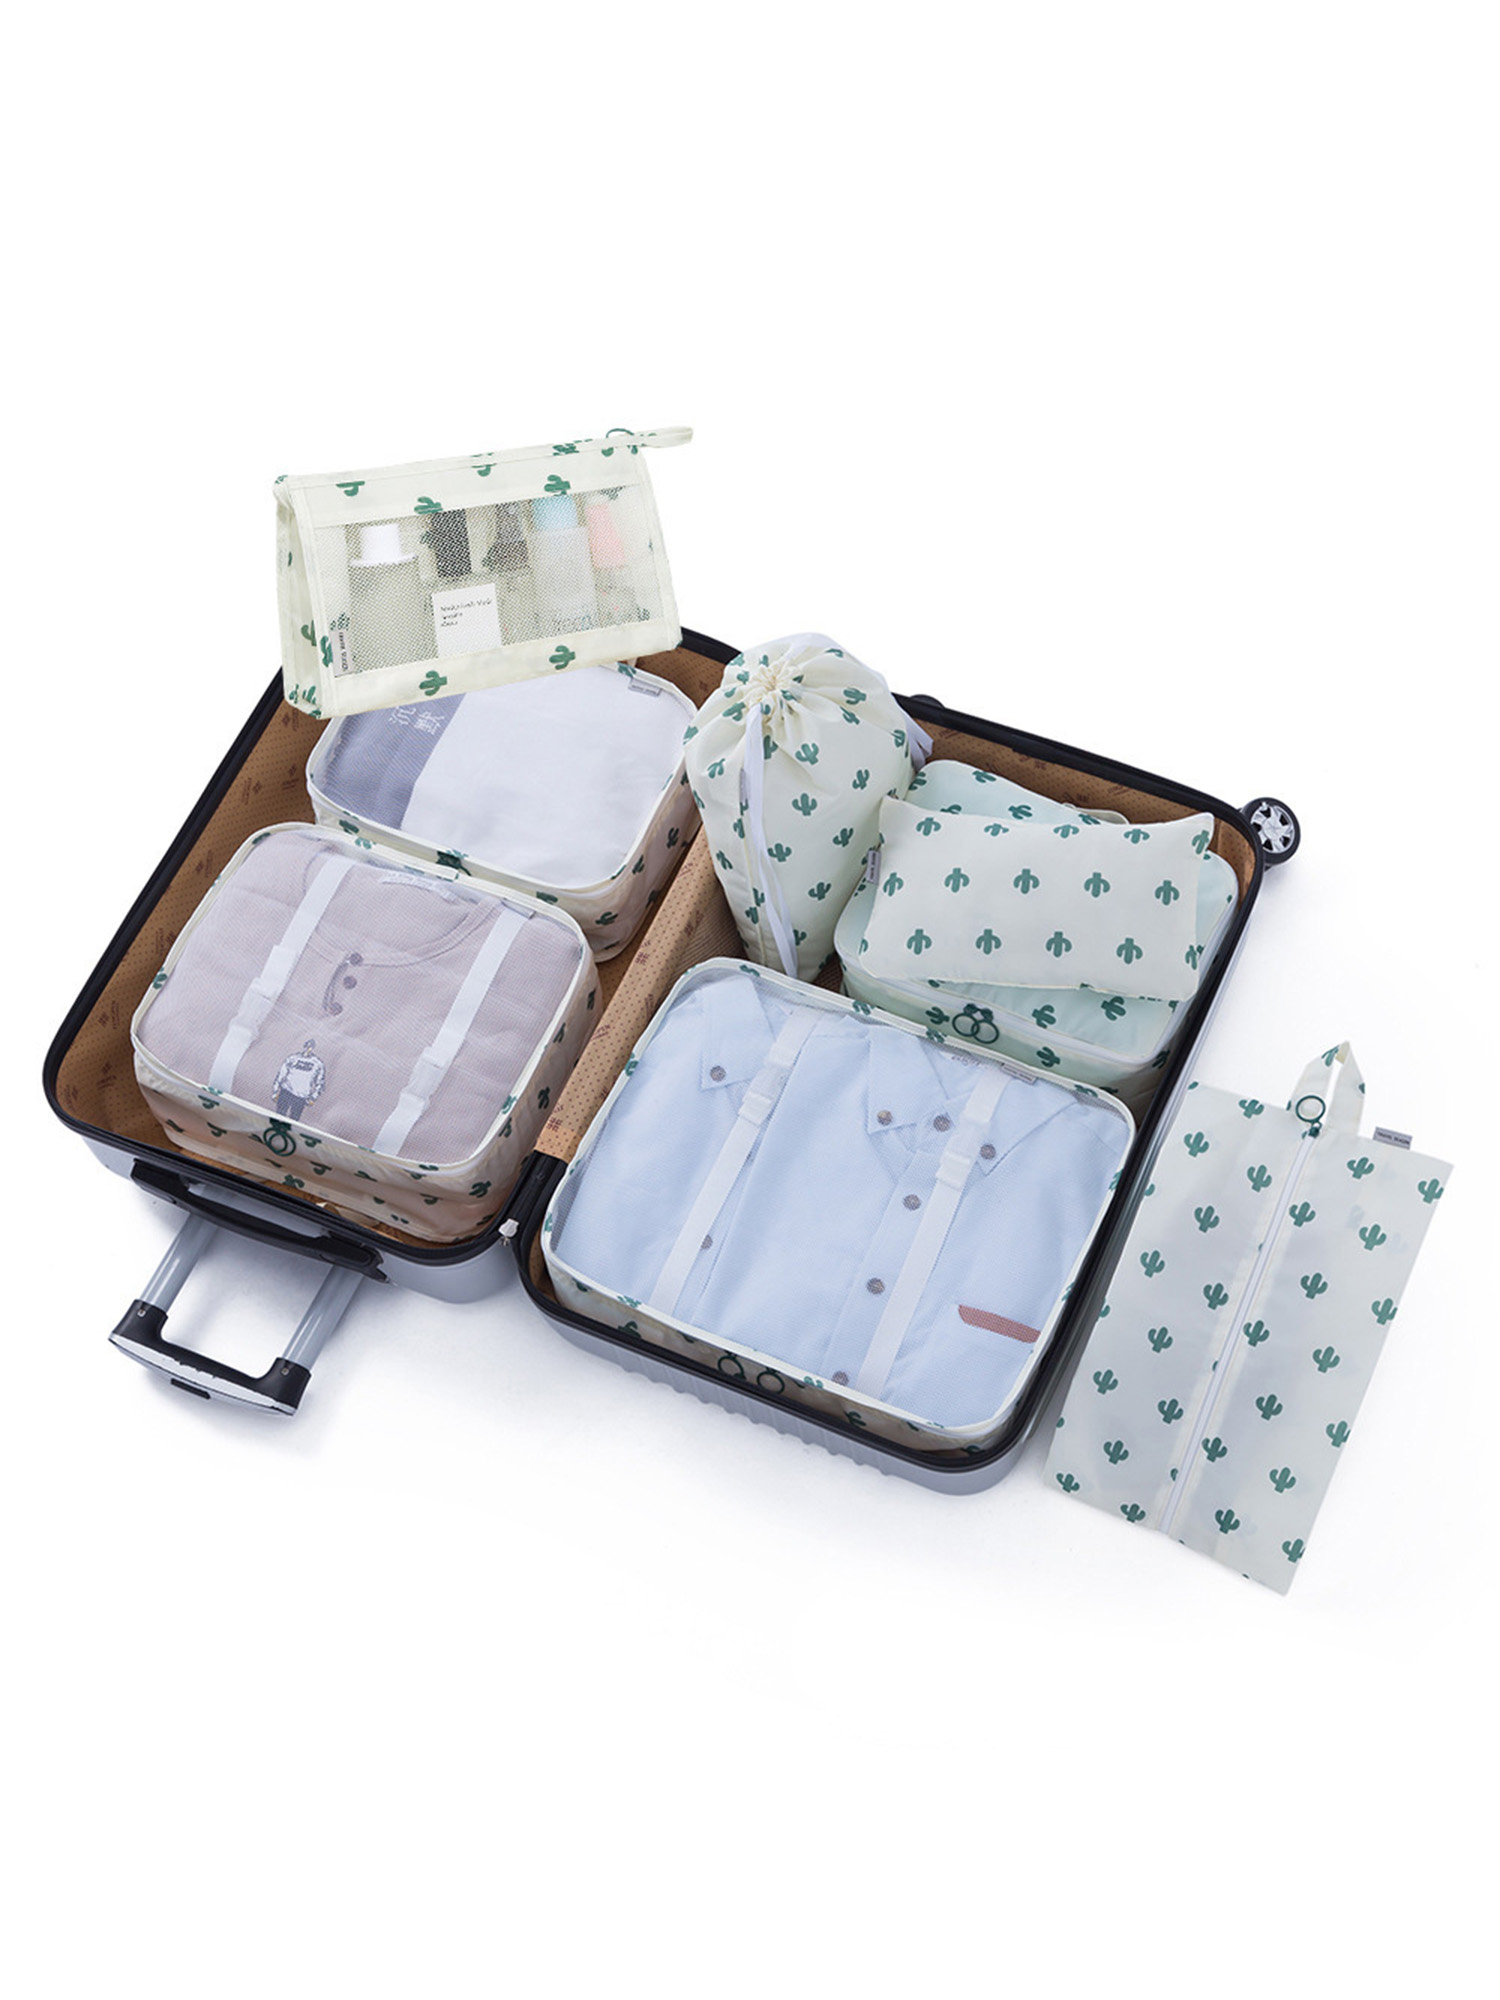 Koovon Packing Cubes for Travel, 8pcs Travel Cubes Set Foldable Suitcase Organizer Lightweight Luggage Storage Bag, Gray, Size: Large